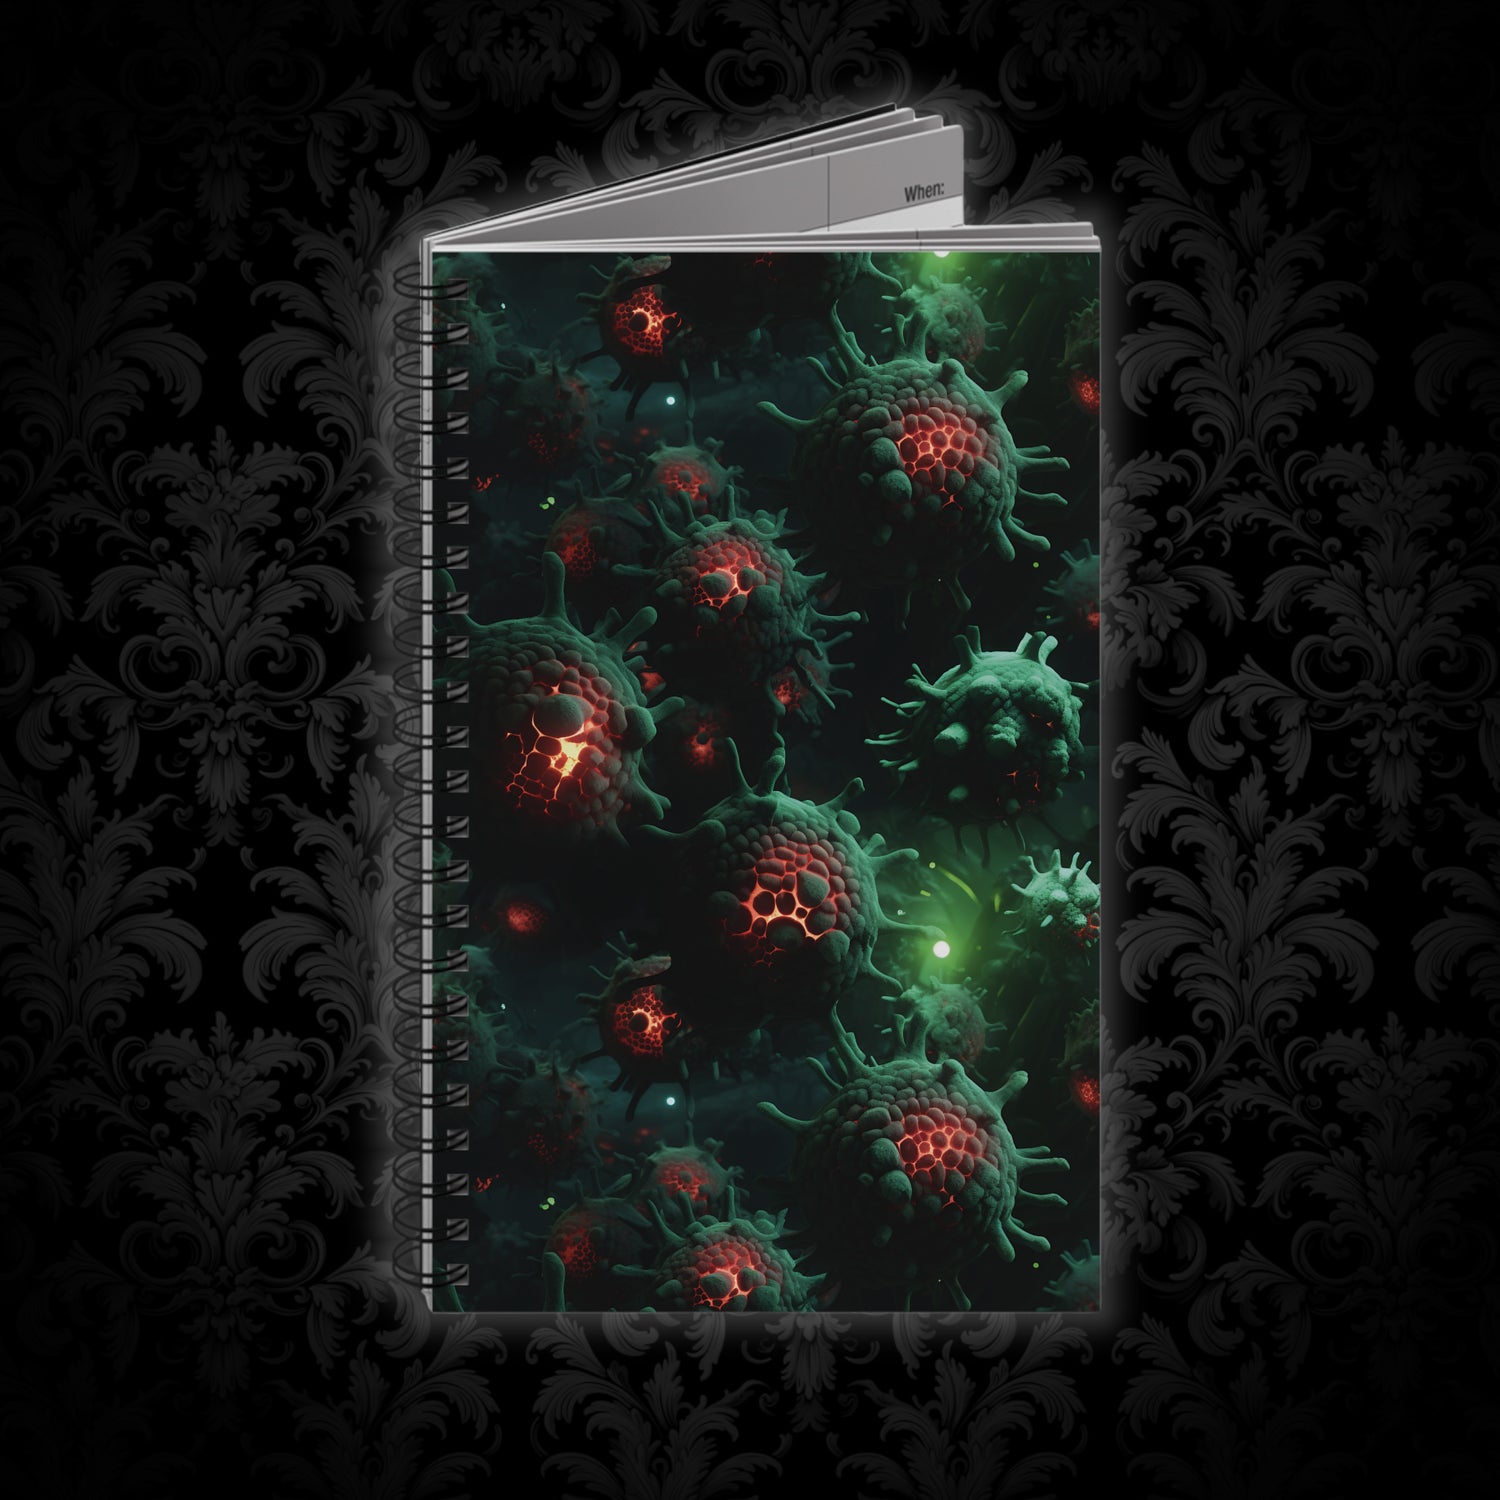 Spiral Notebook Bacterial Disease - Frogos Design